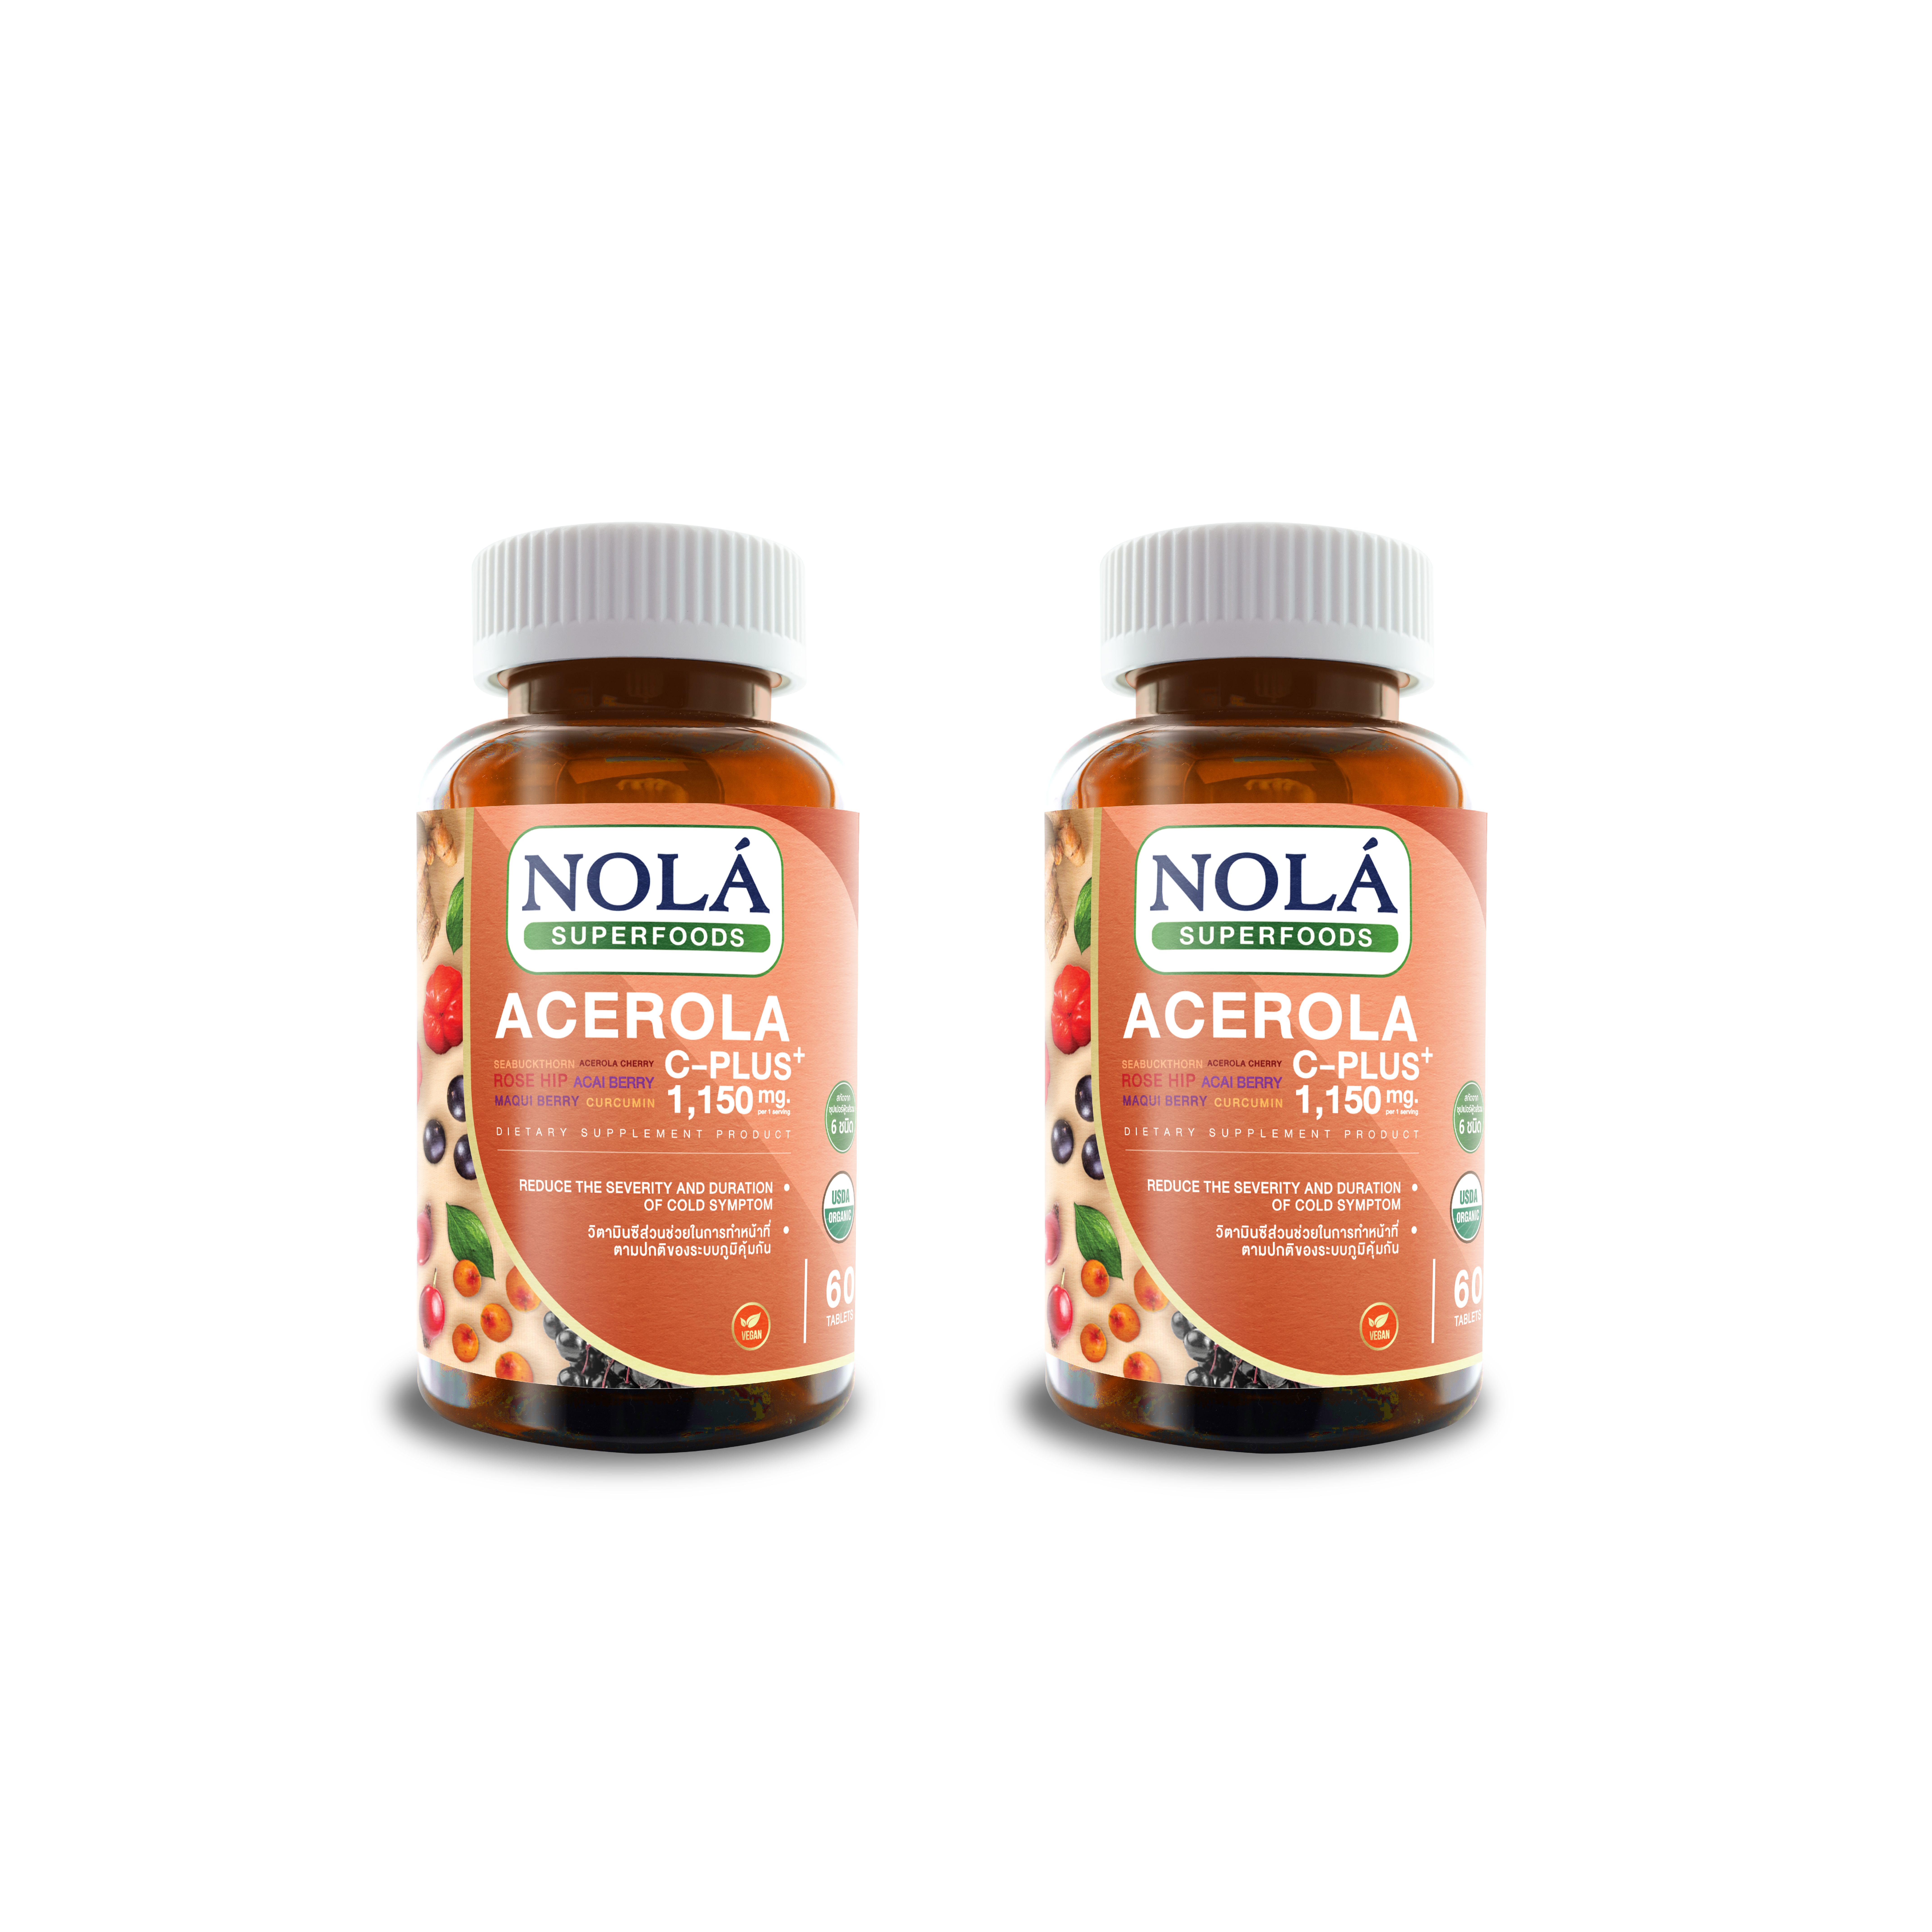  NOLA Acerola CPlus Natural Vitamin C From 6 Superfood ( 2 bottles)